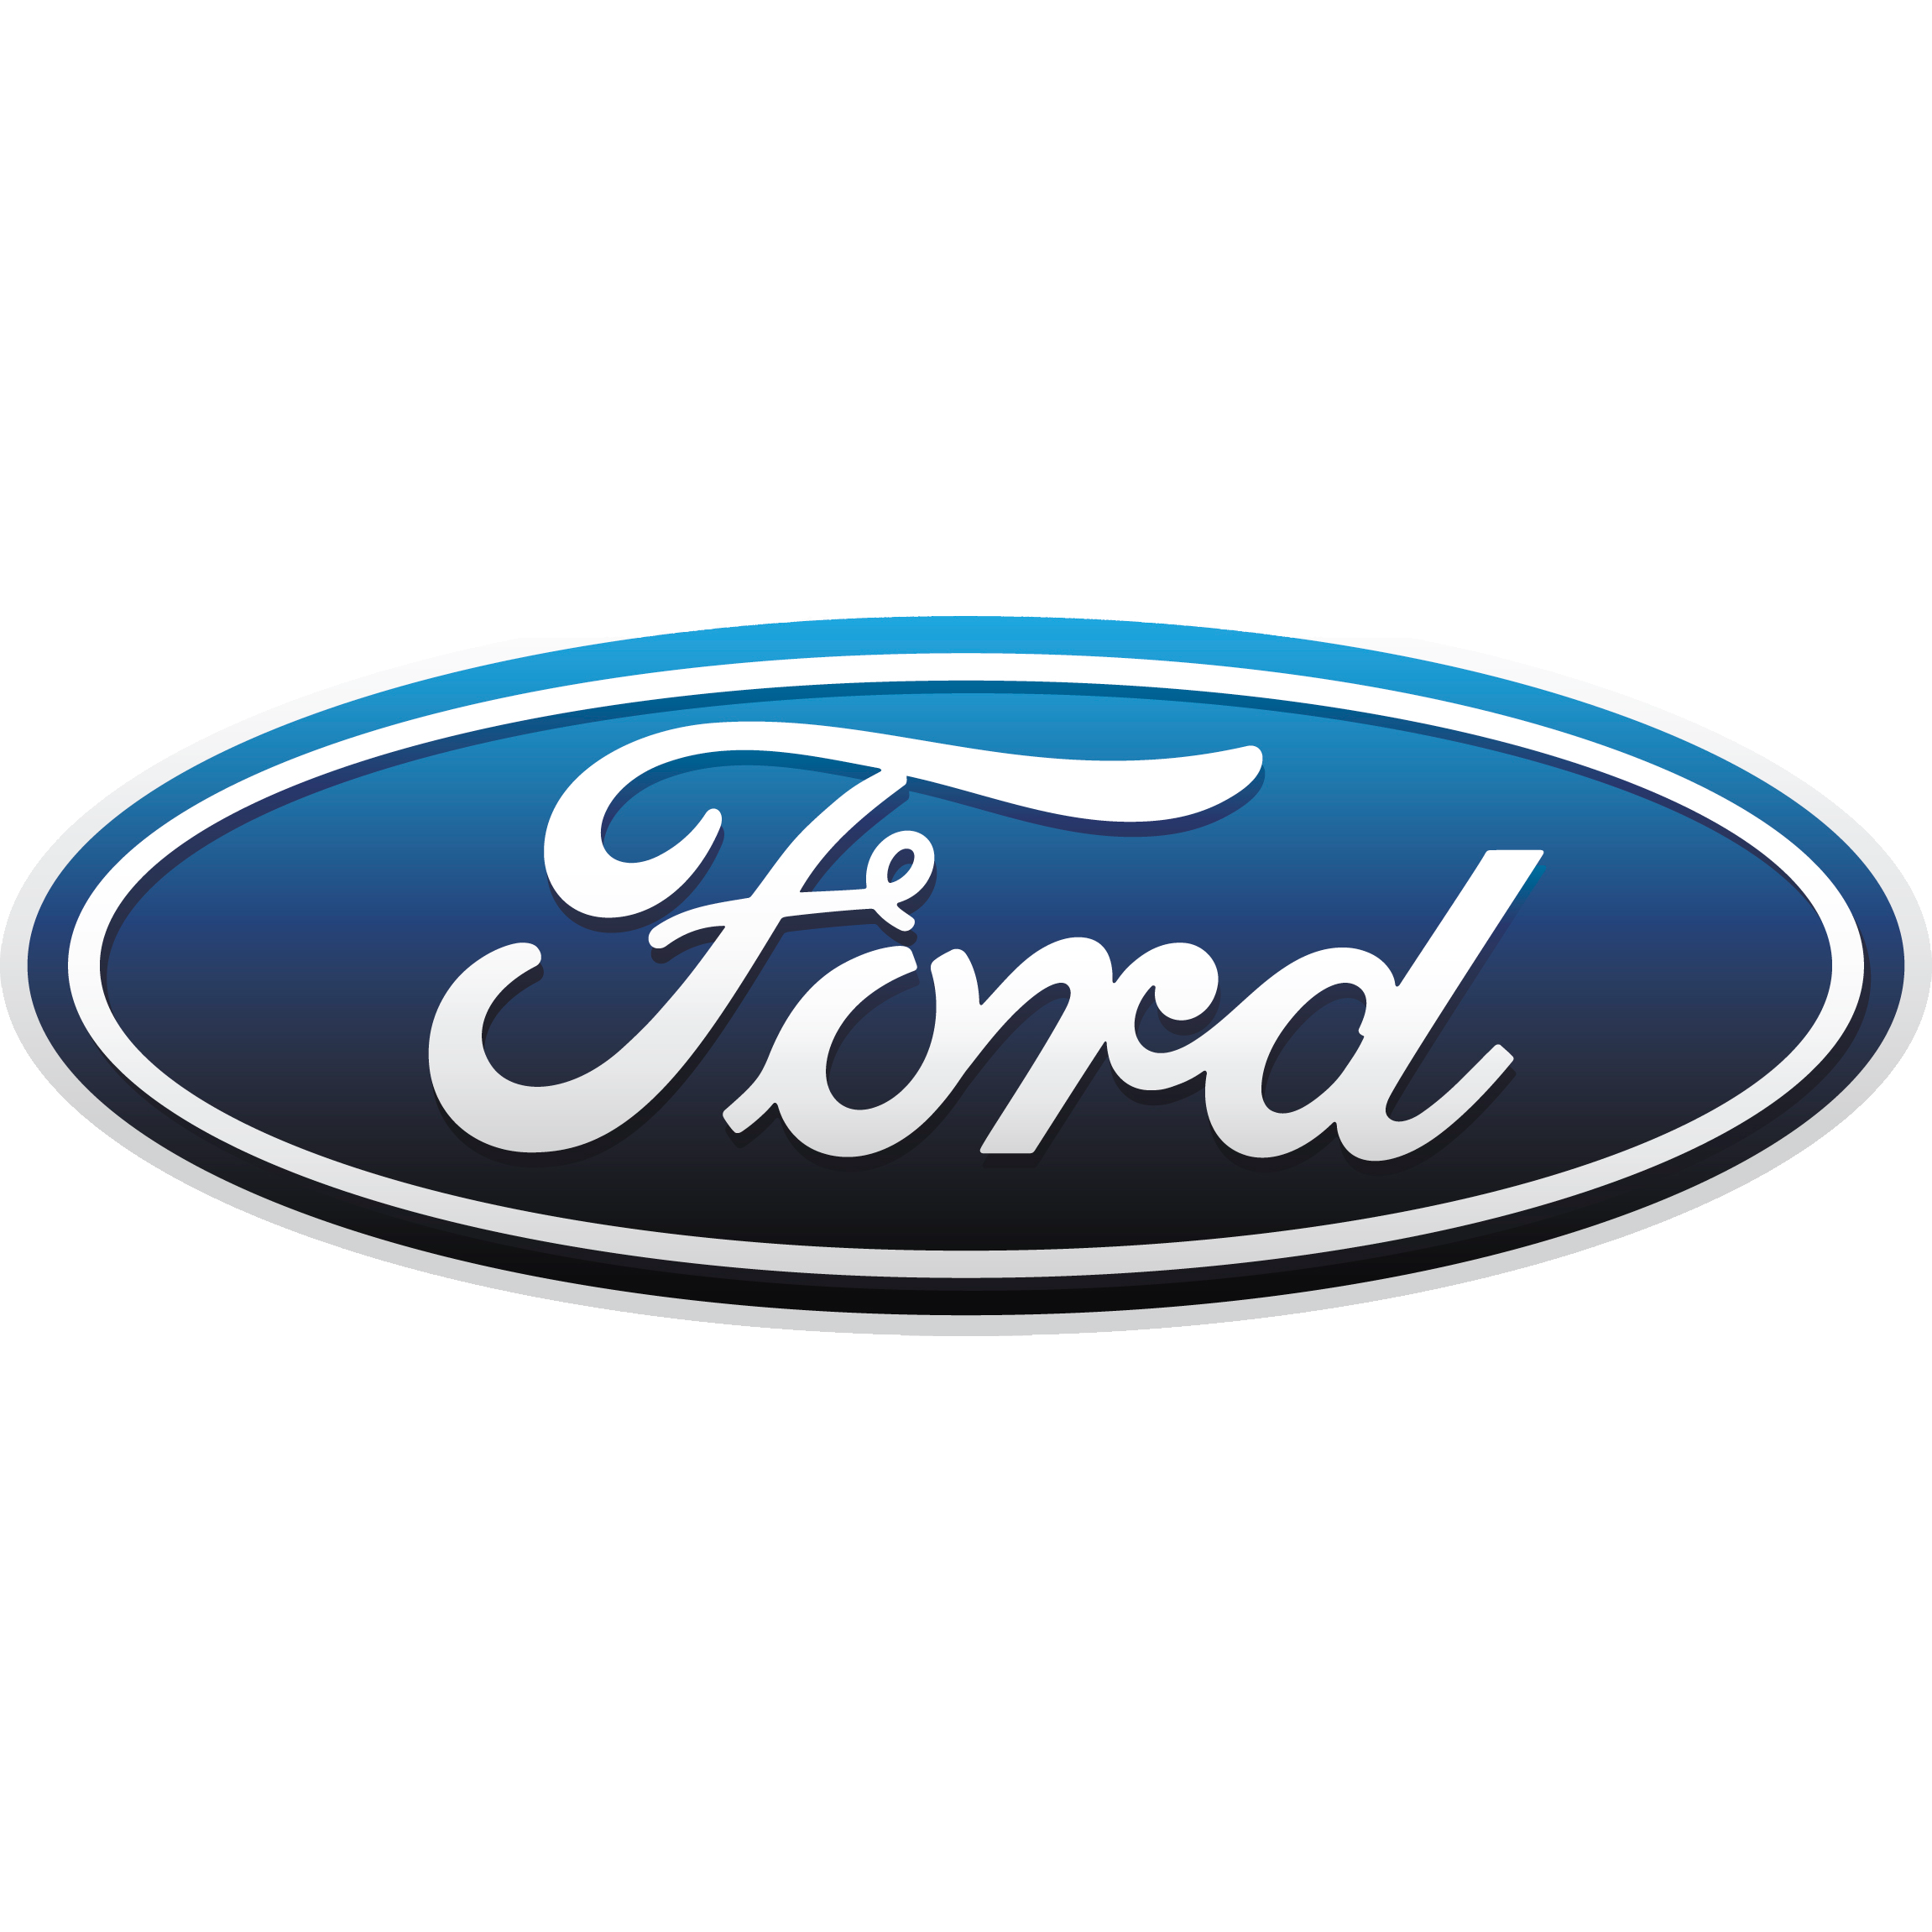 kisspng-ford-motor-company-2012-ford-explorer-logo-ford-ra-allion-5b508d6bcf6237.7078637815320057398495